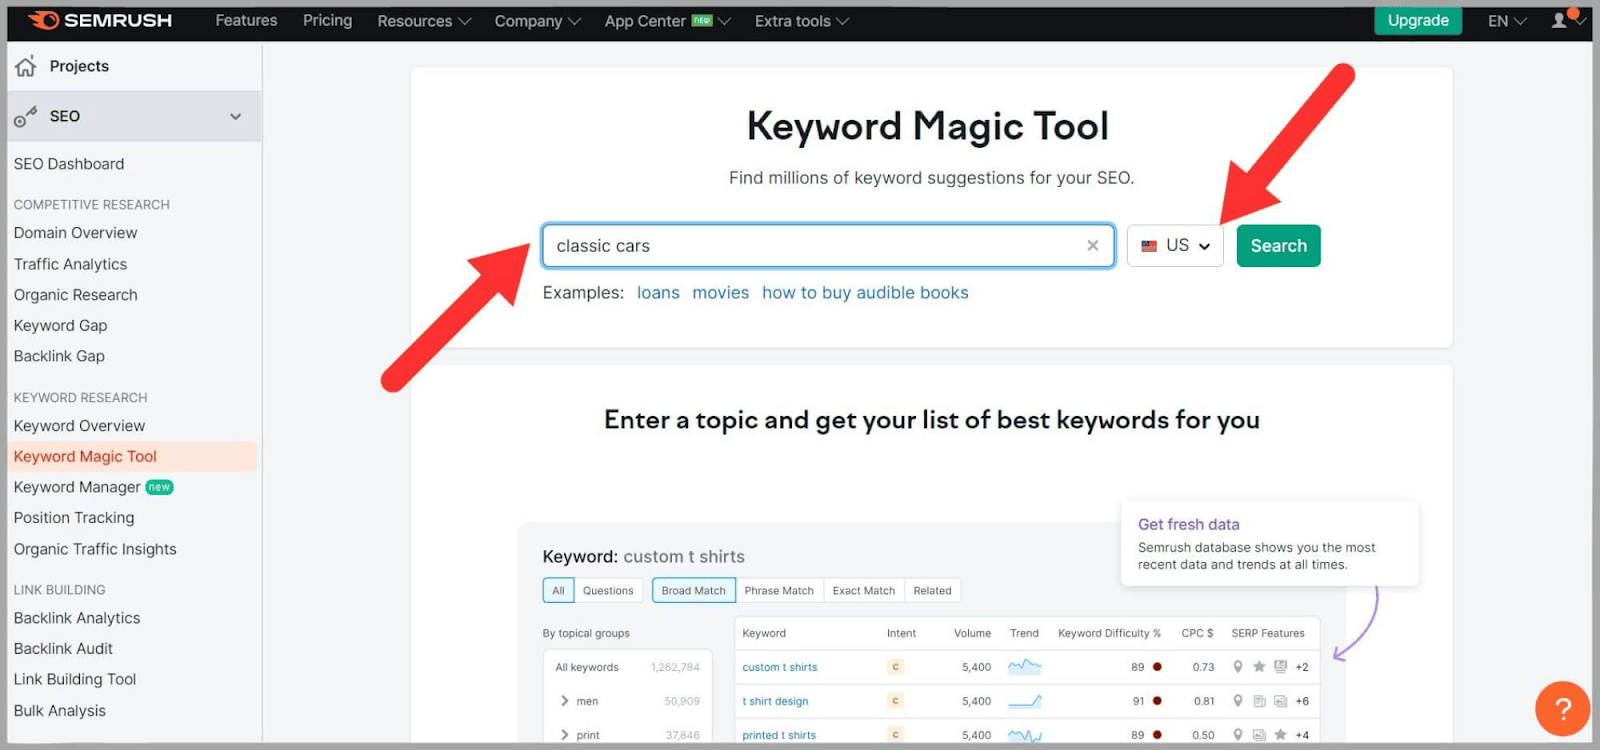 Semrush Keyword Magic Tool gives you access to free keyword research